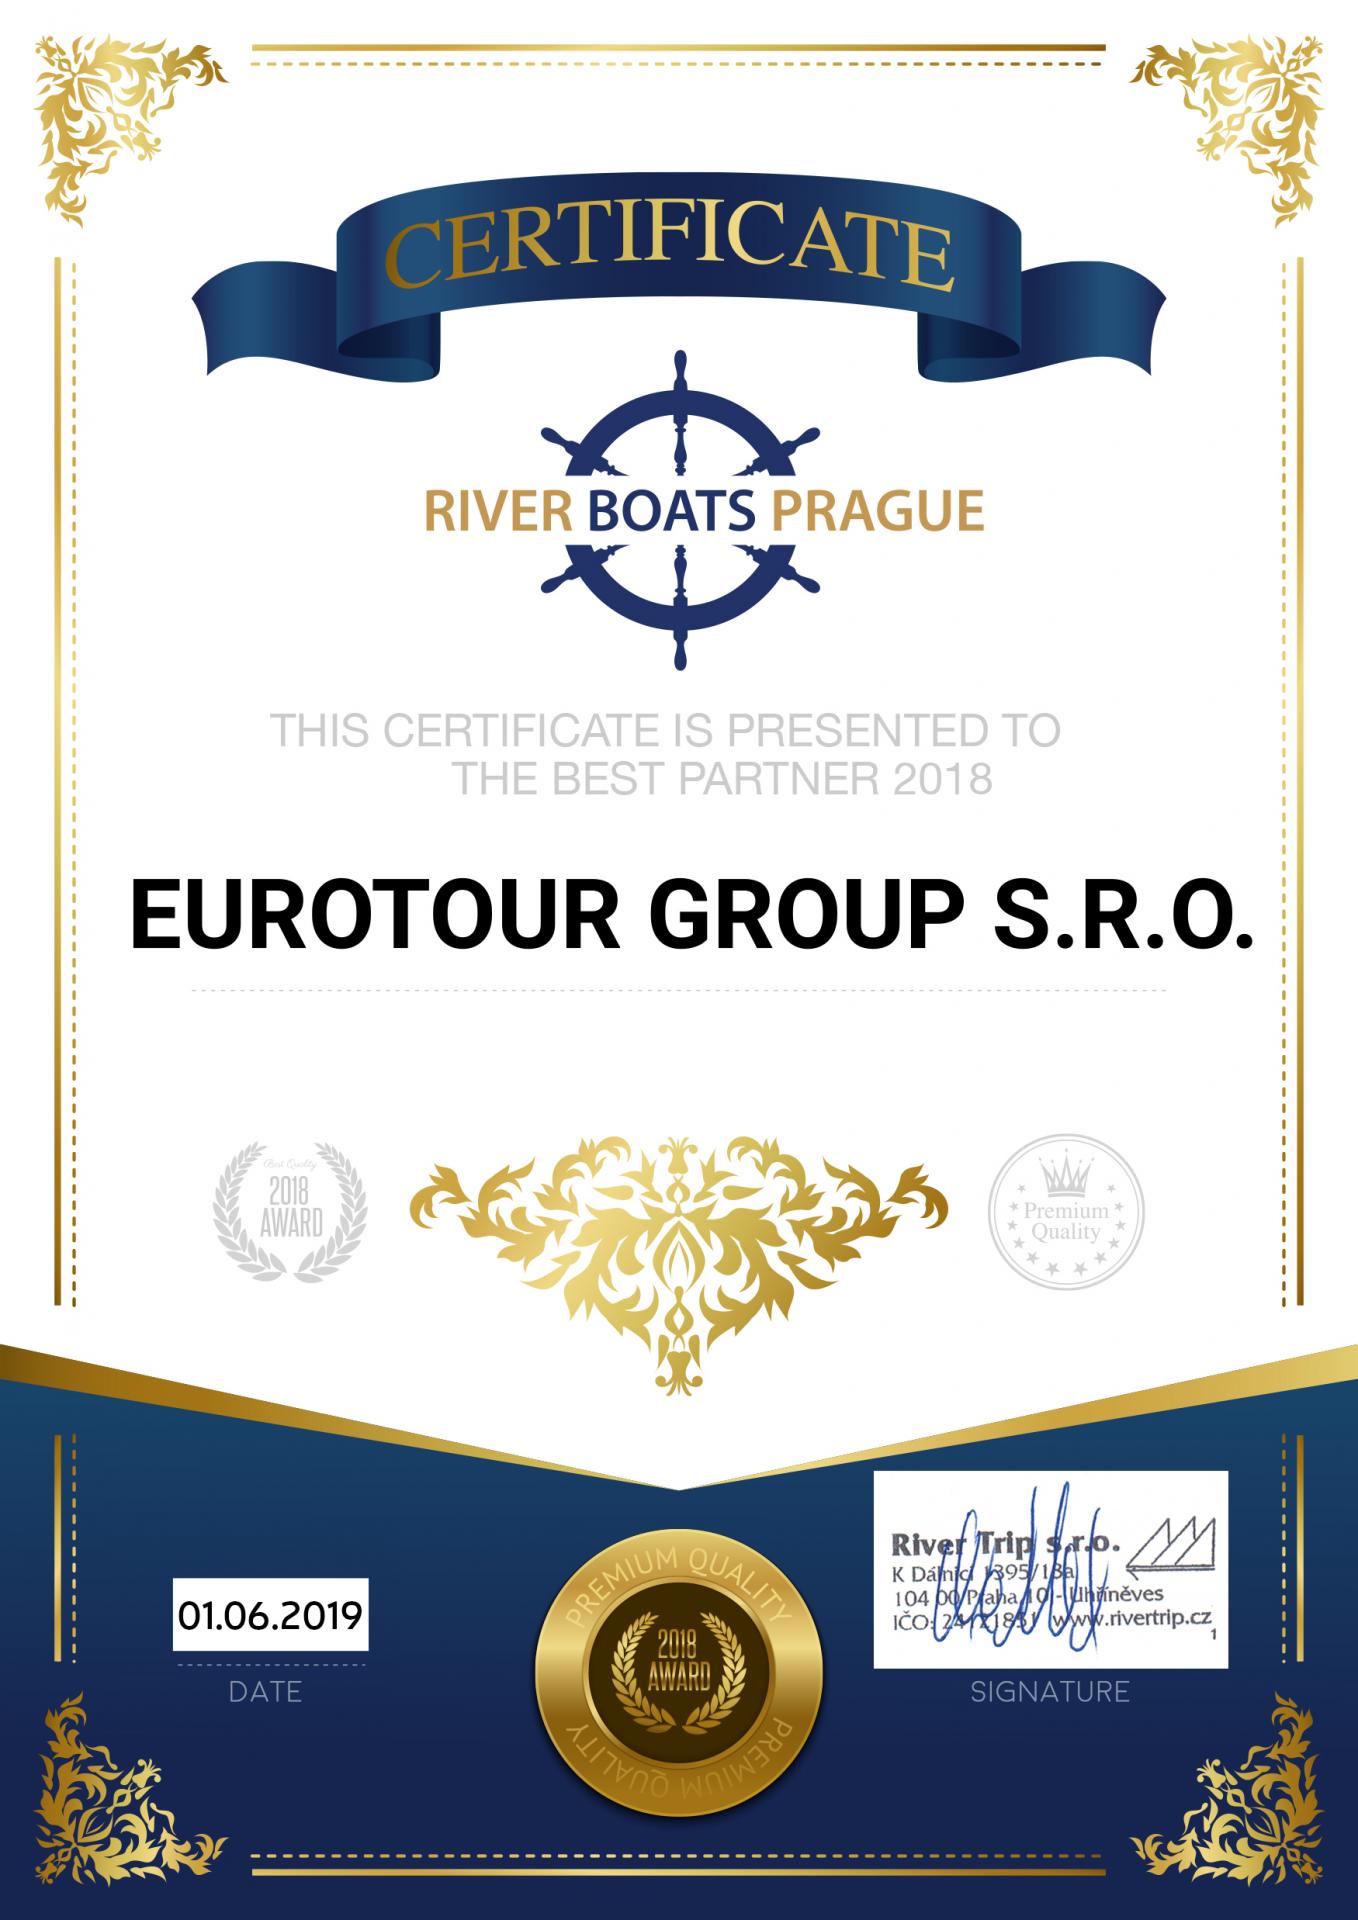 Certifikat Prague boats